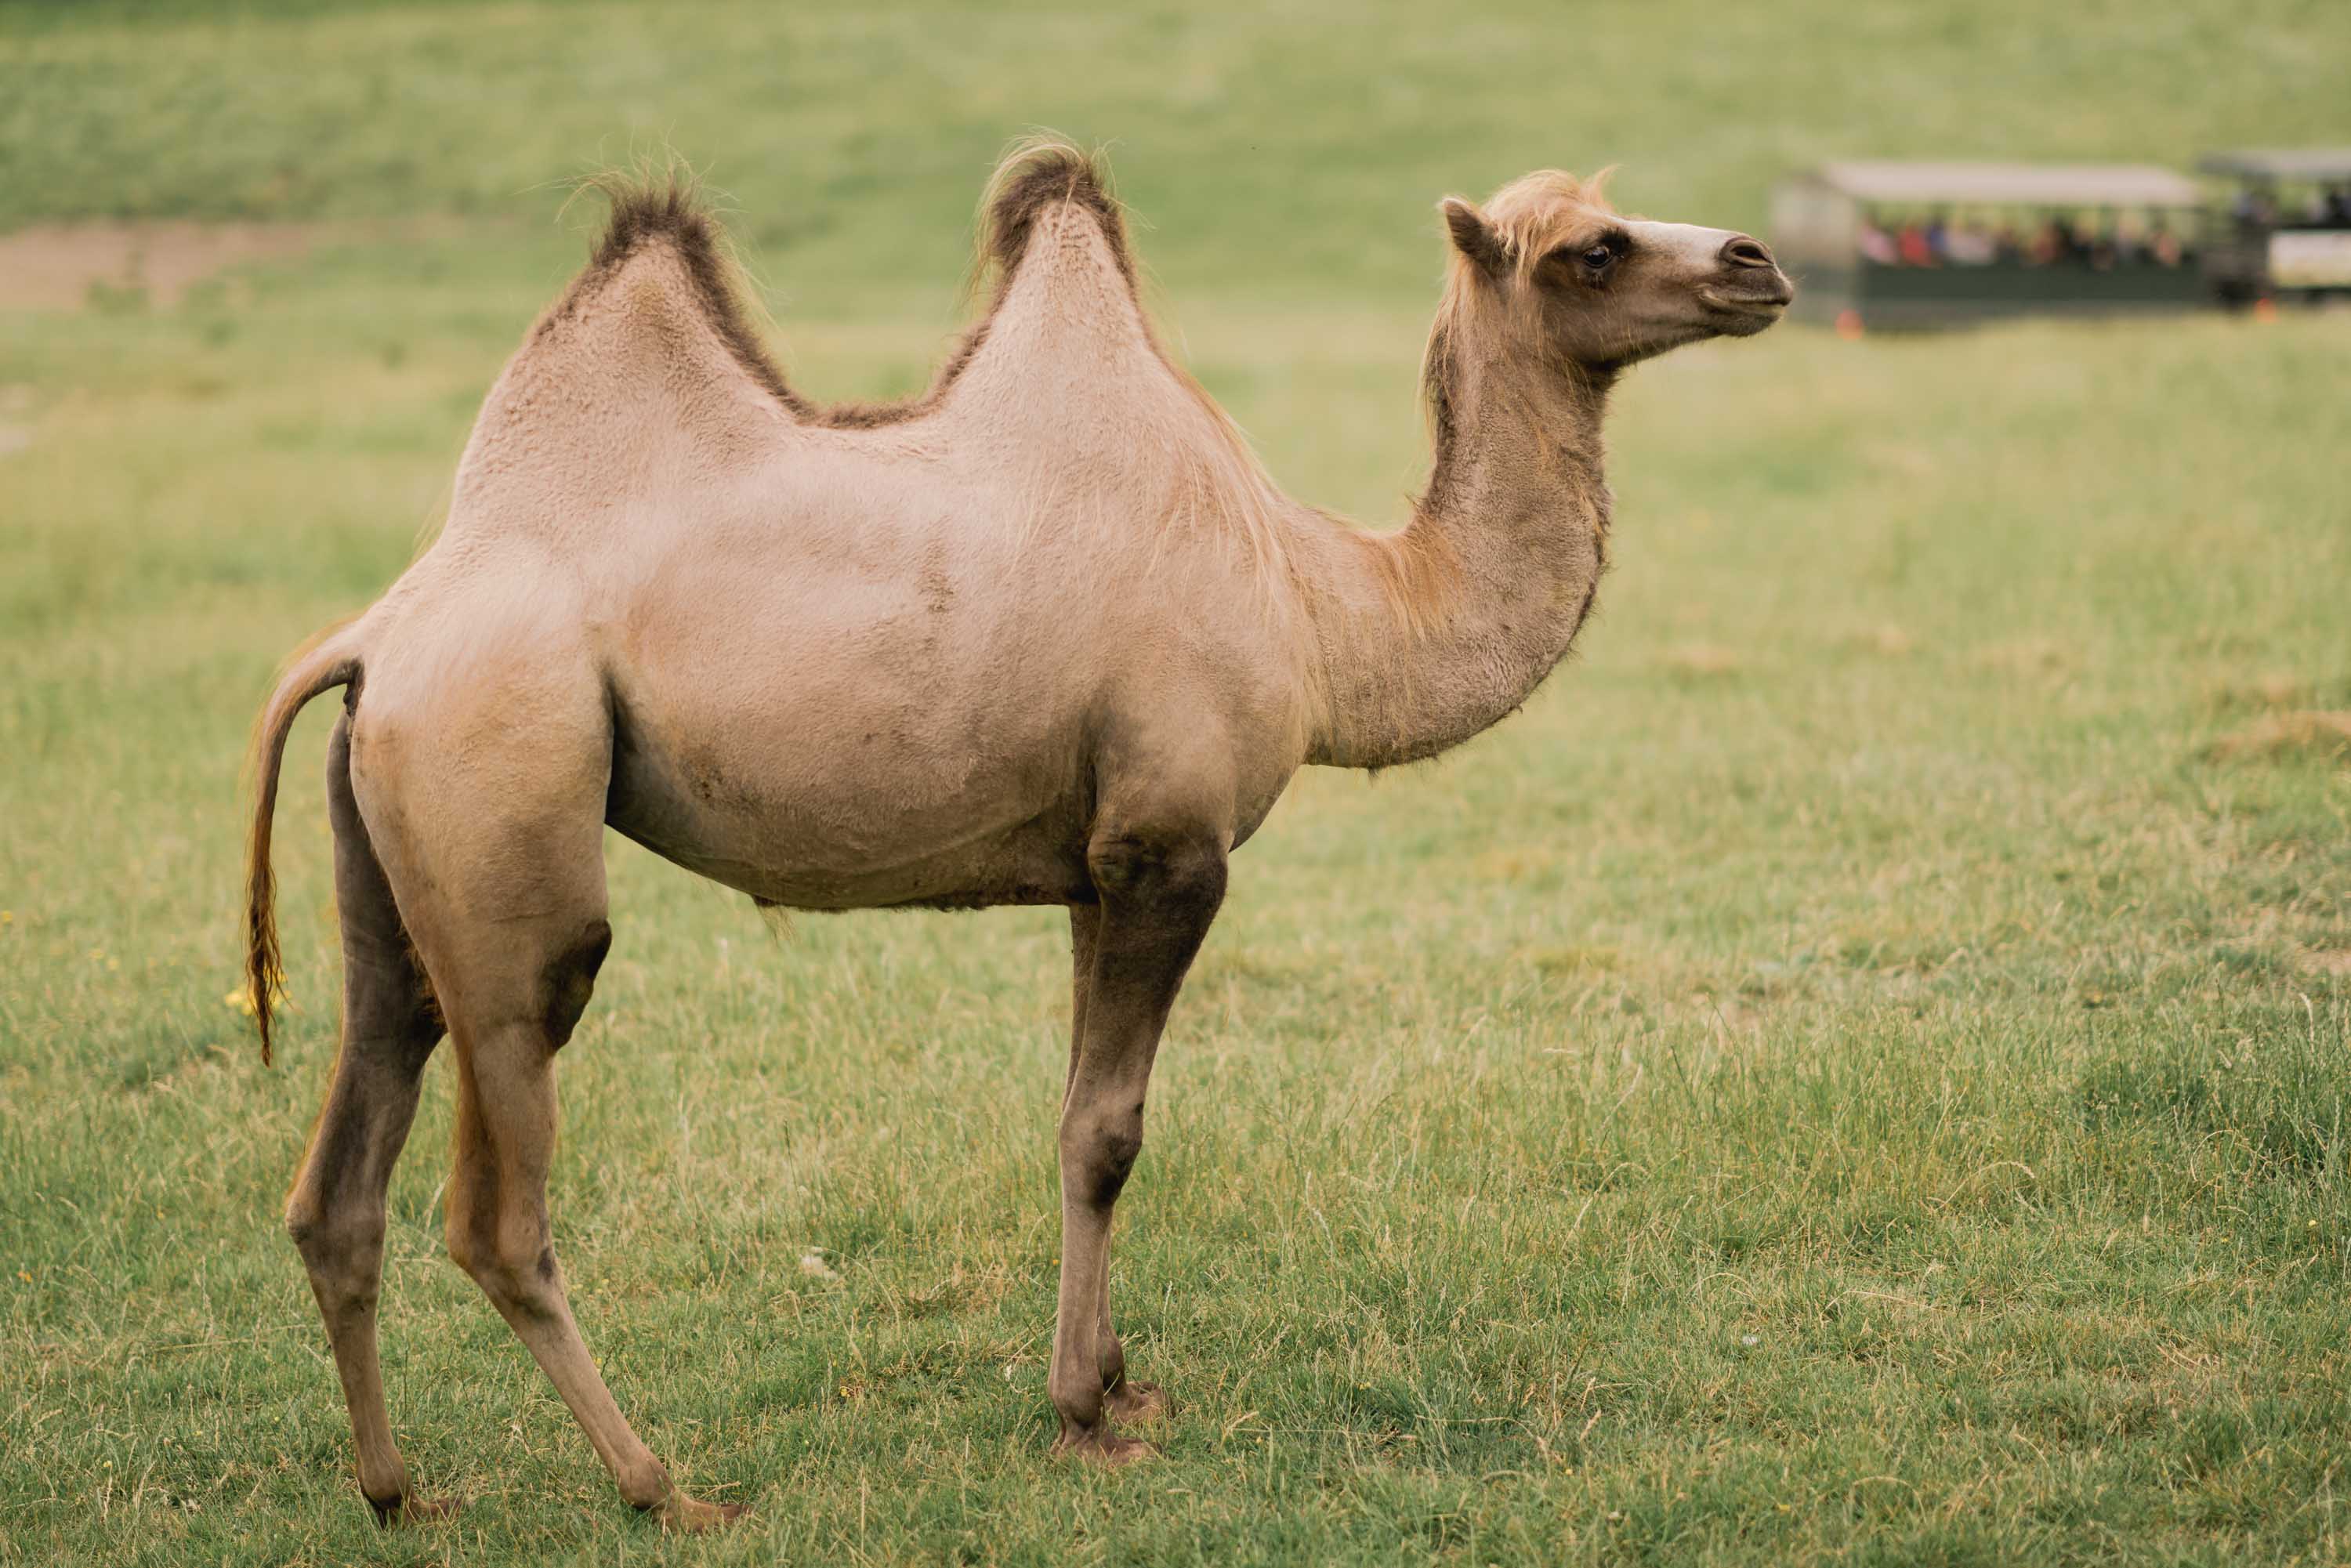 Camel at Port Lympne Safari Park in Kent.